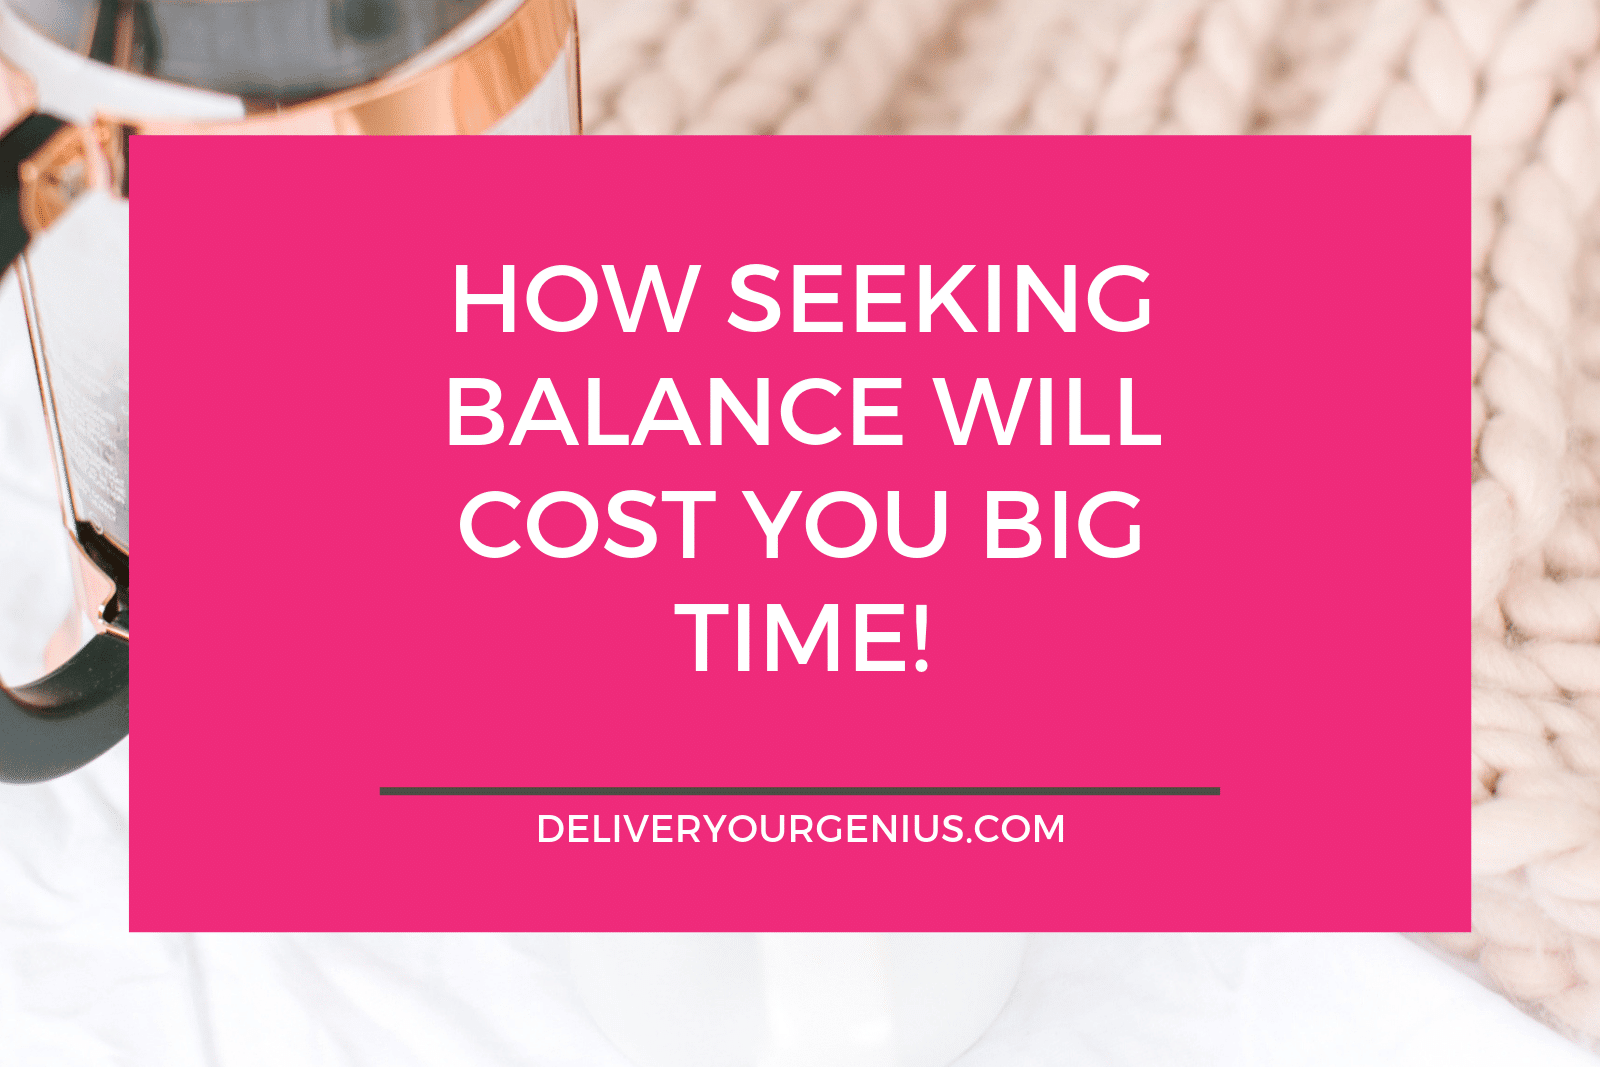 How seeking balance will cost you big time!